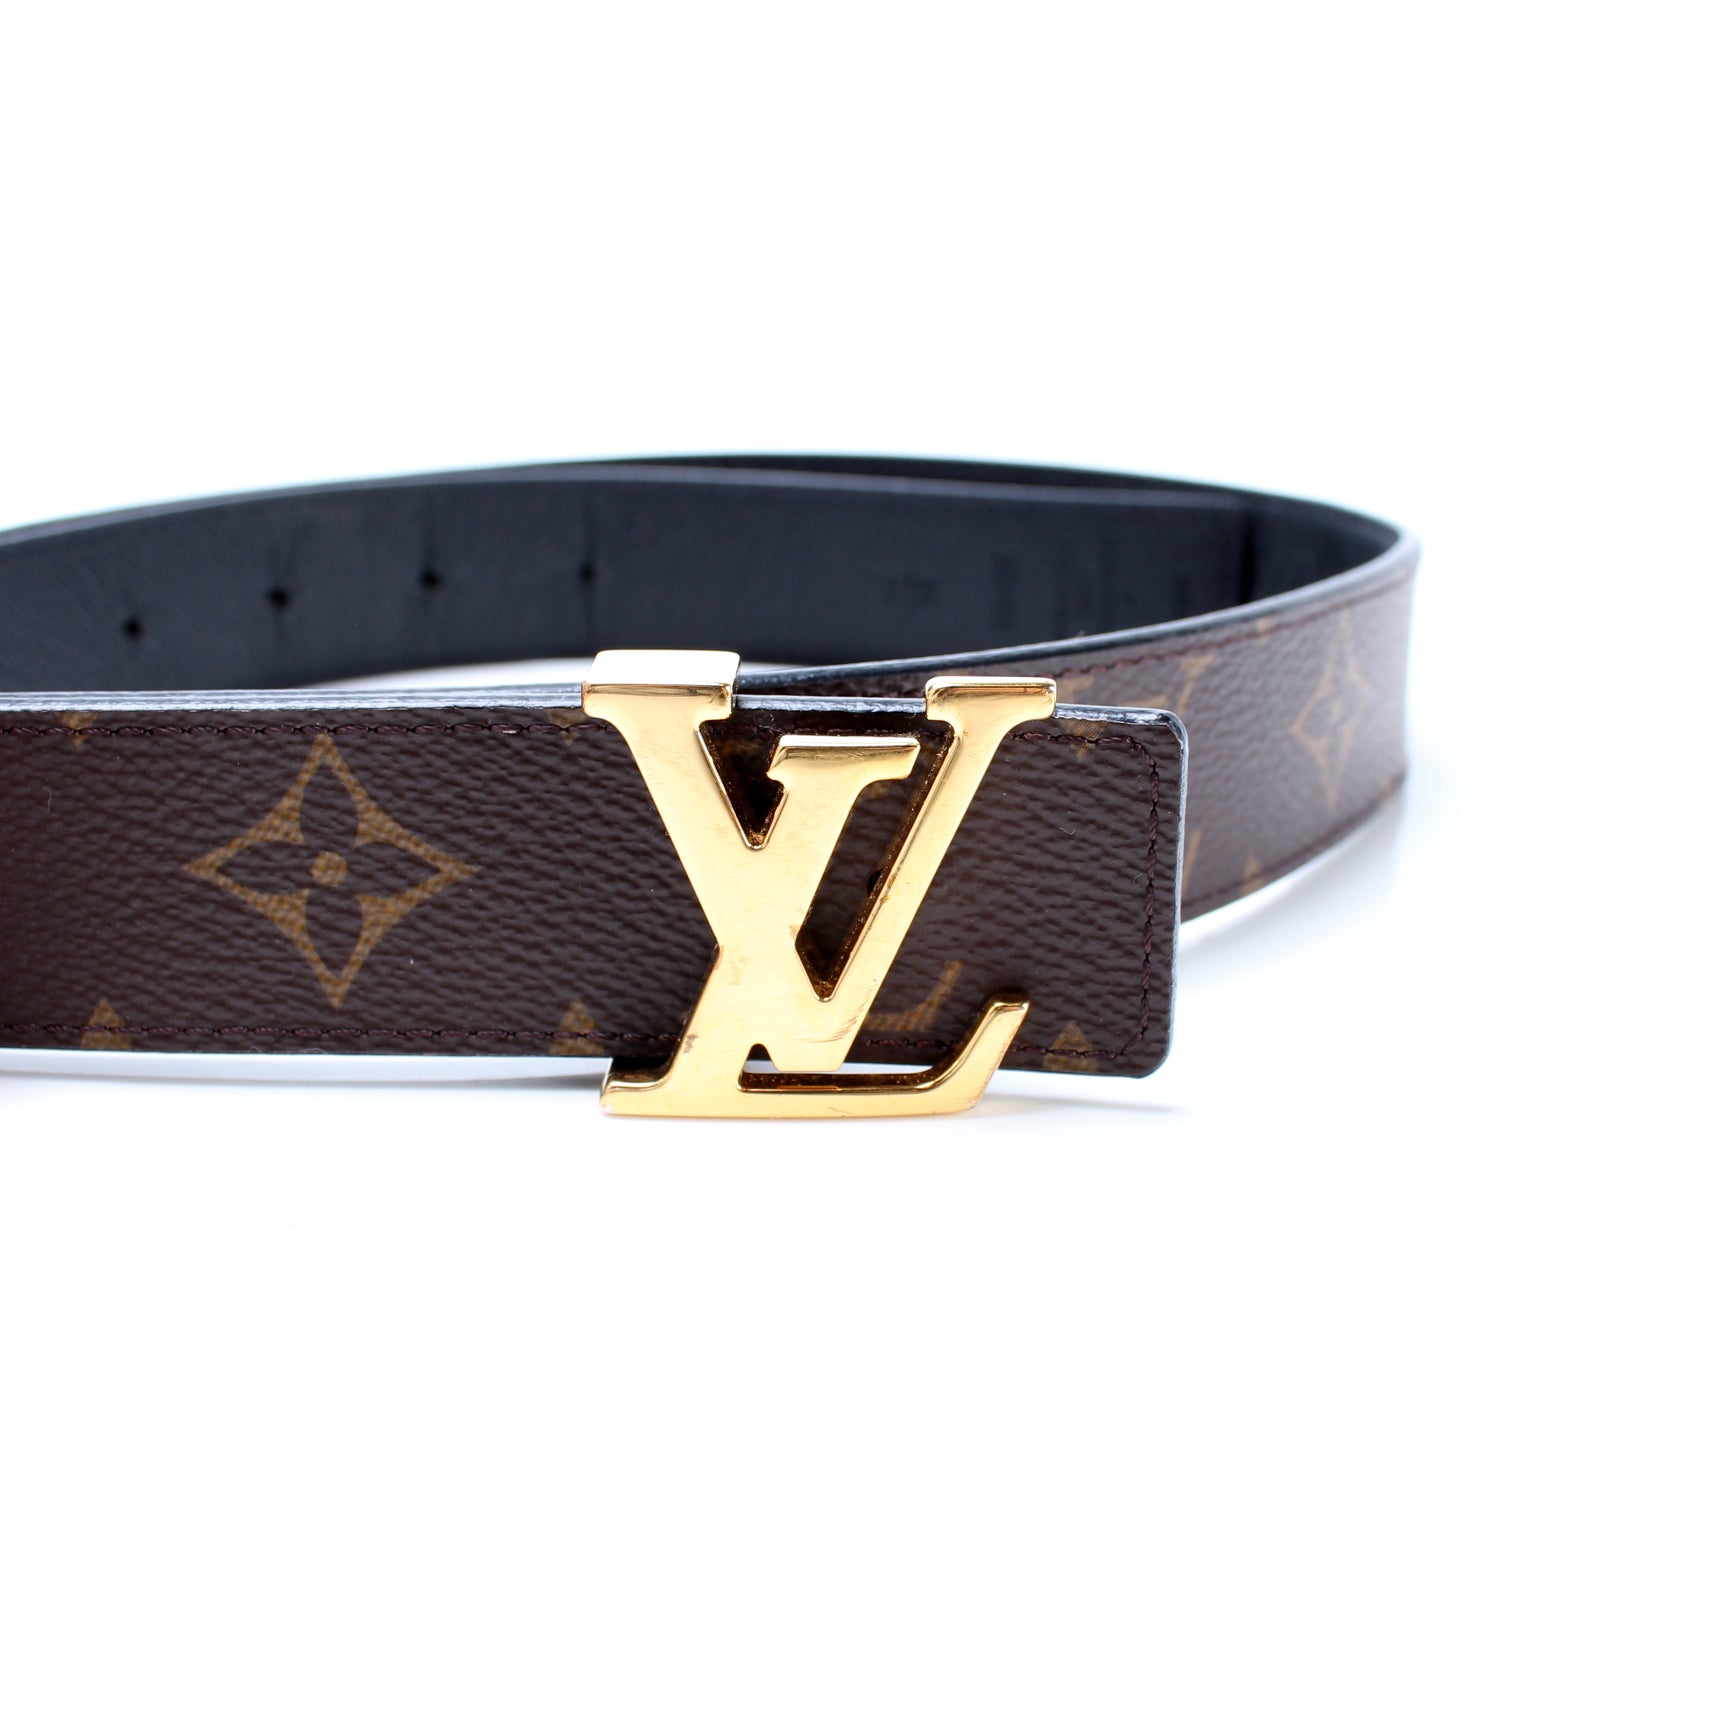 LV Initiales Black Leather Belt 85 / 30